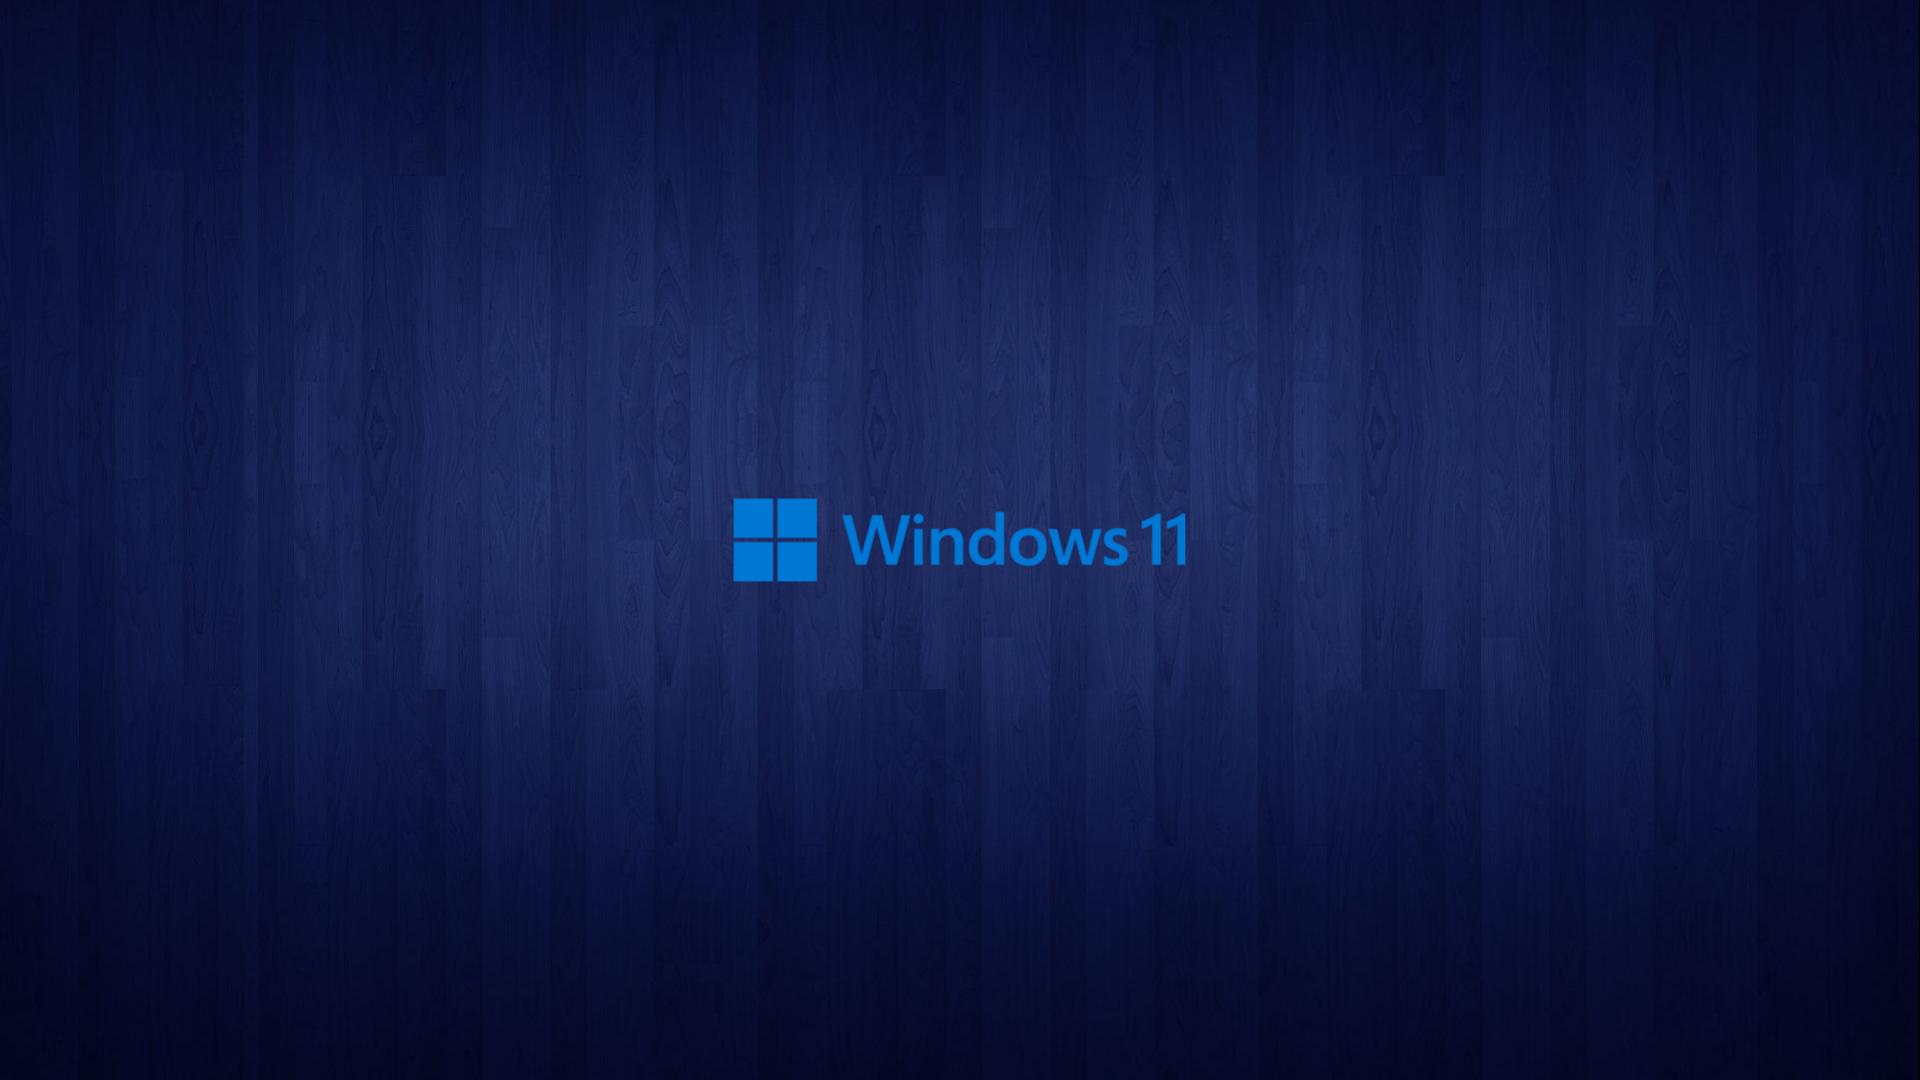 Dark Blue Wood Pattern Background for Windows 11 Wallpaper Wallpaper. Wallpaper Download. High Resolution Wallpaper